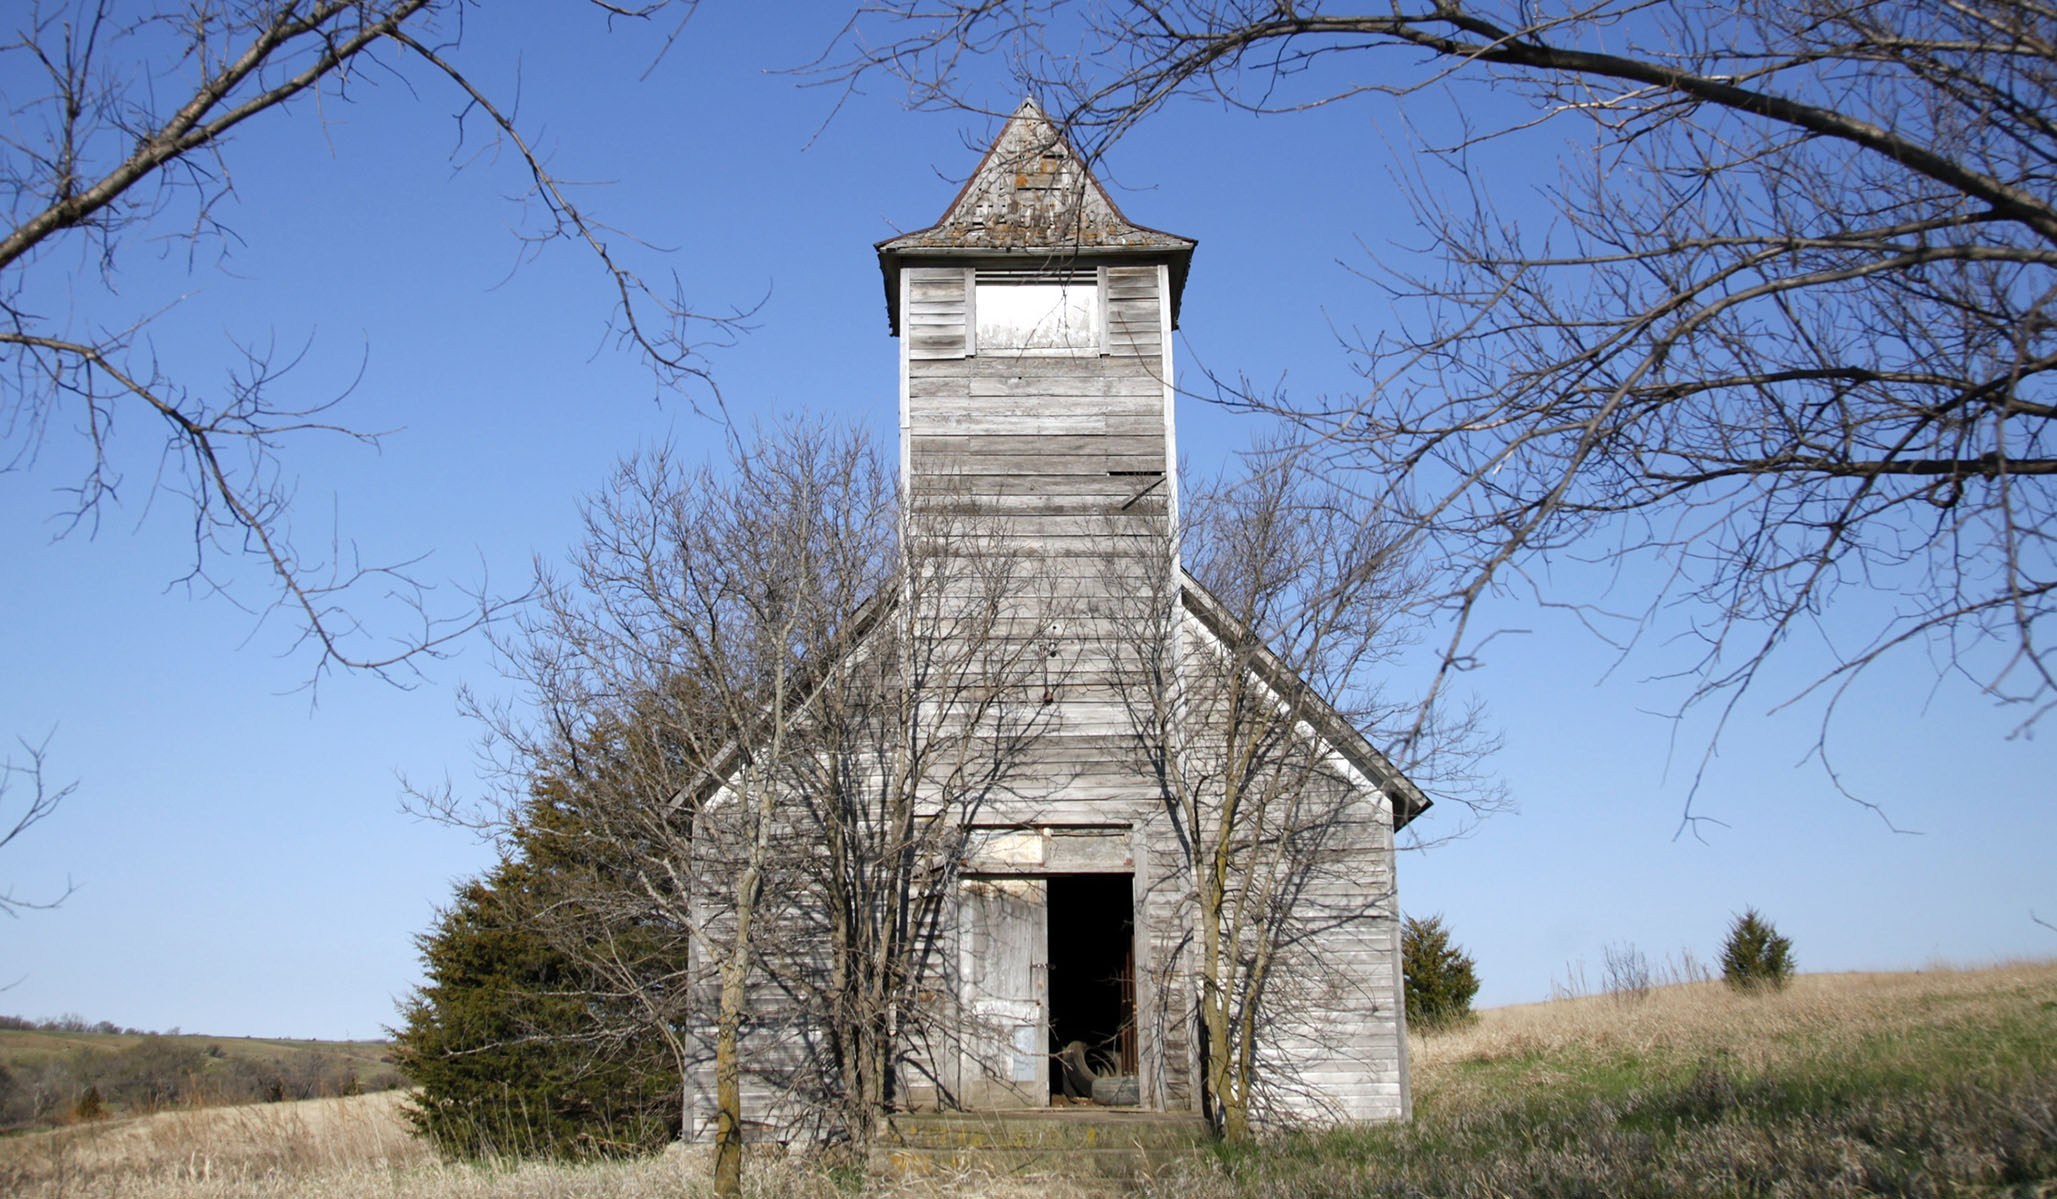 Abandoned Methodist church in Monowi, NE